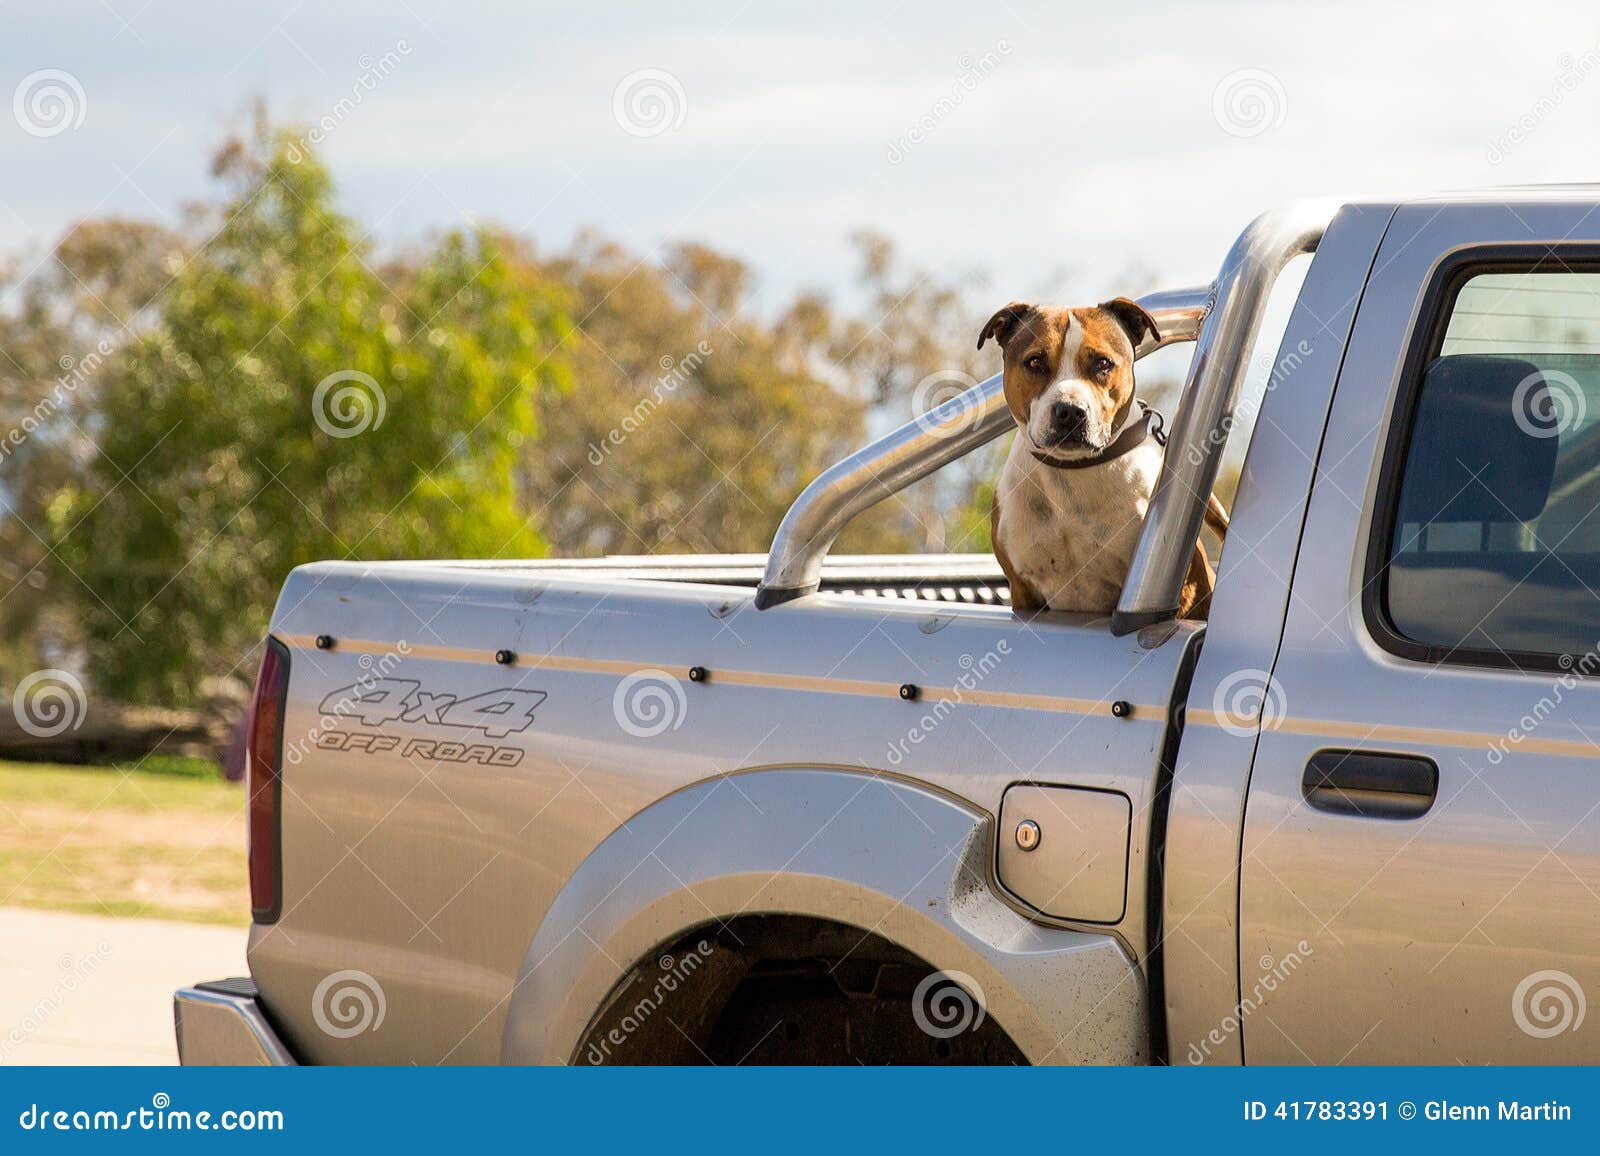 dog guarding a truck